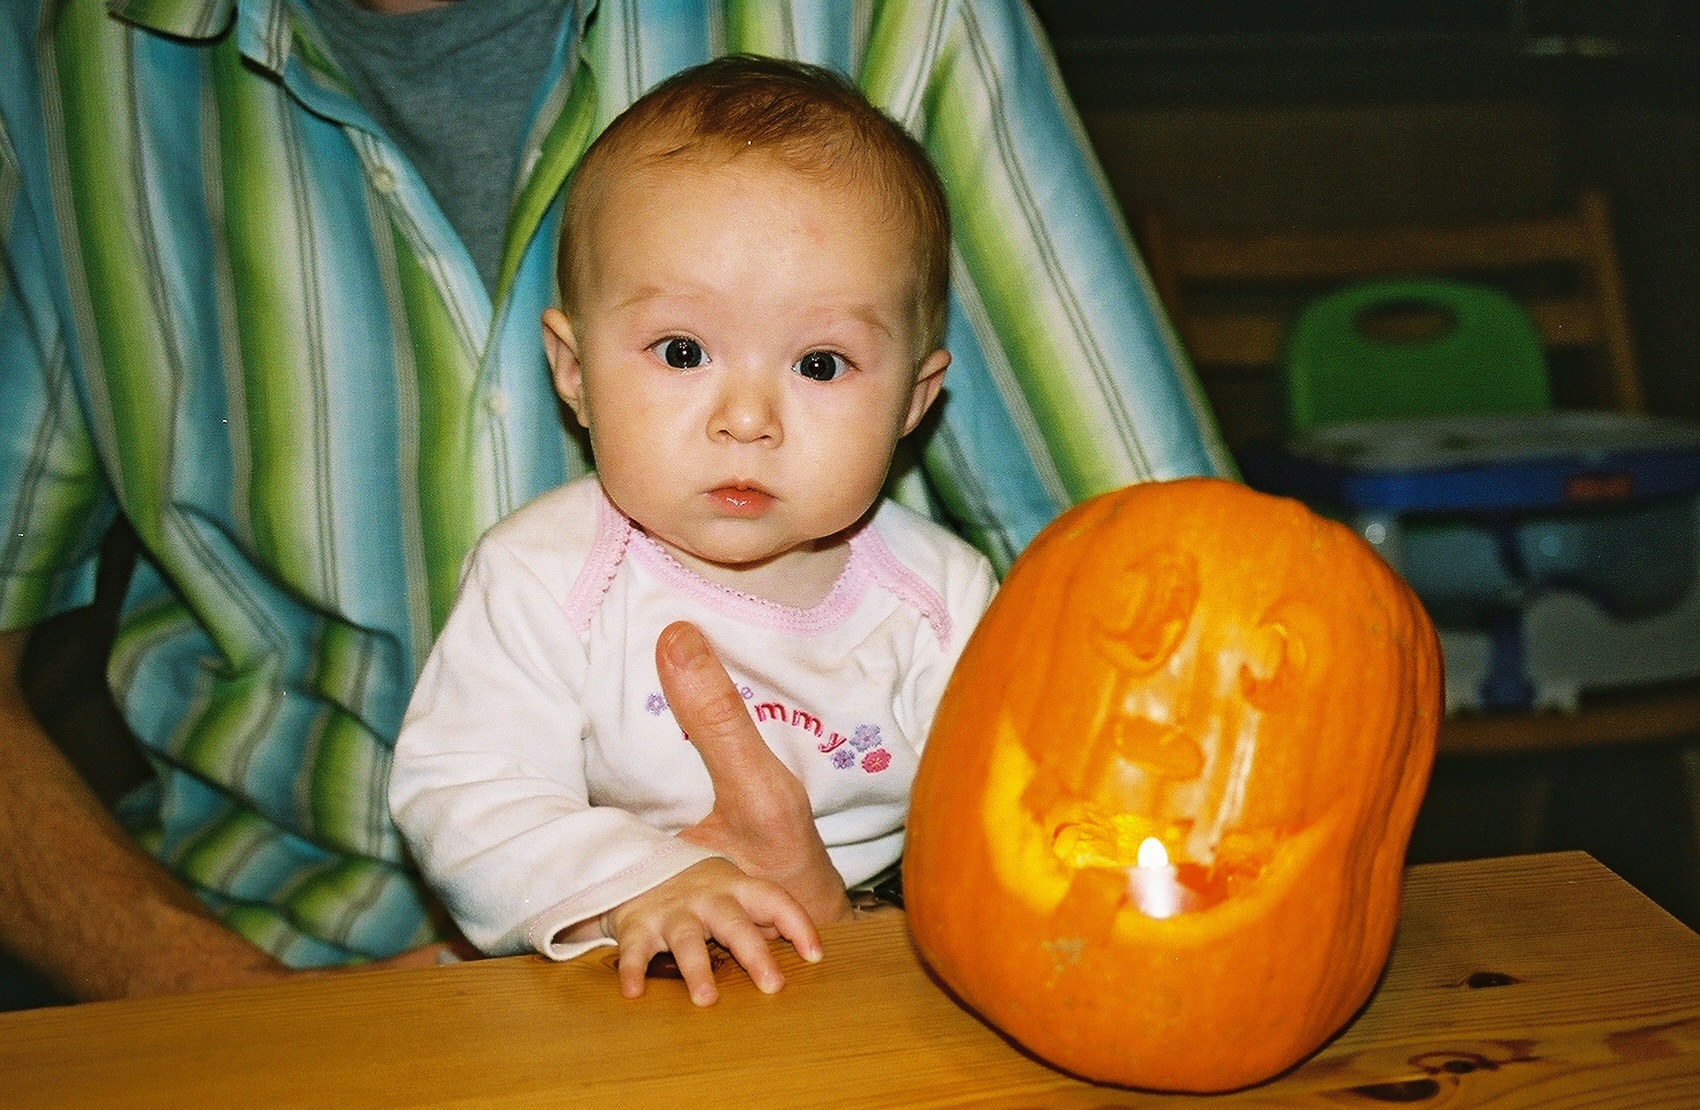 delia and the pumpkin